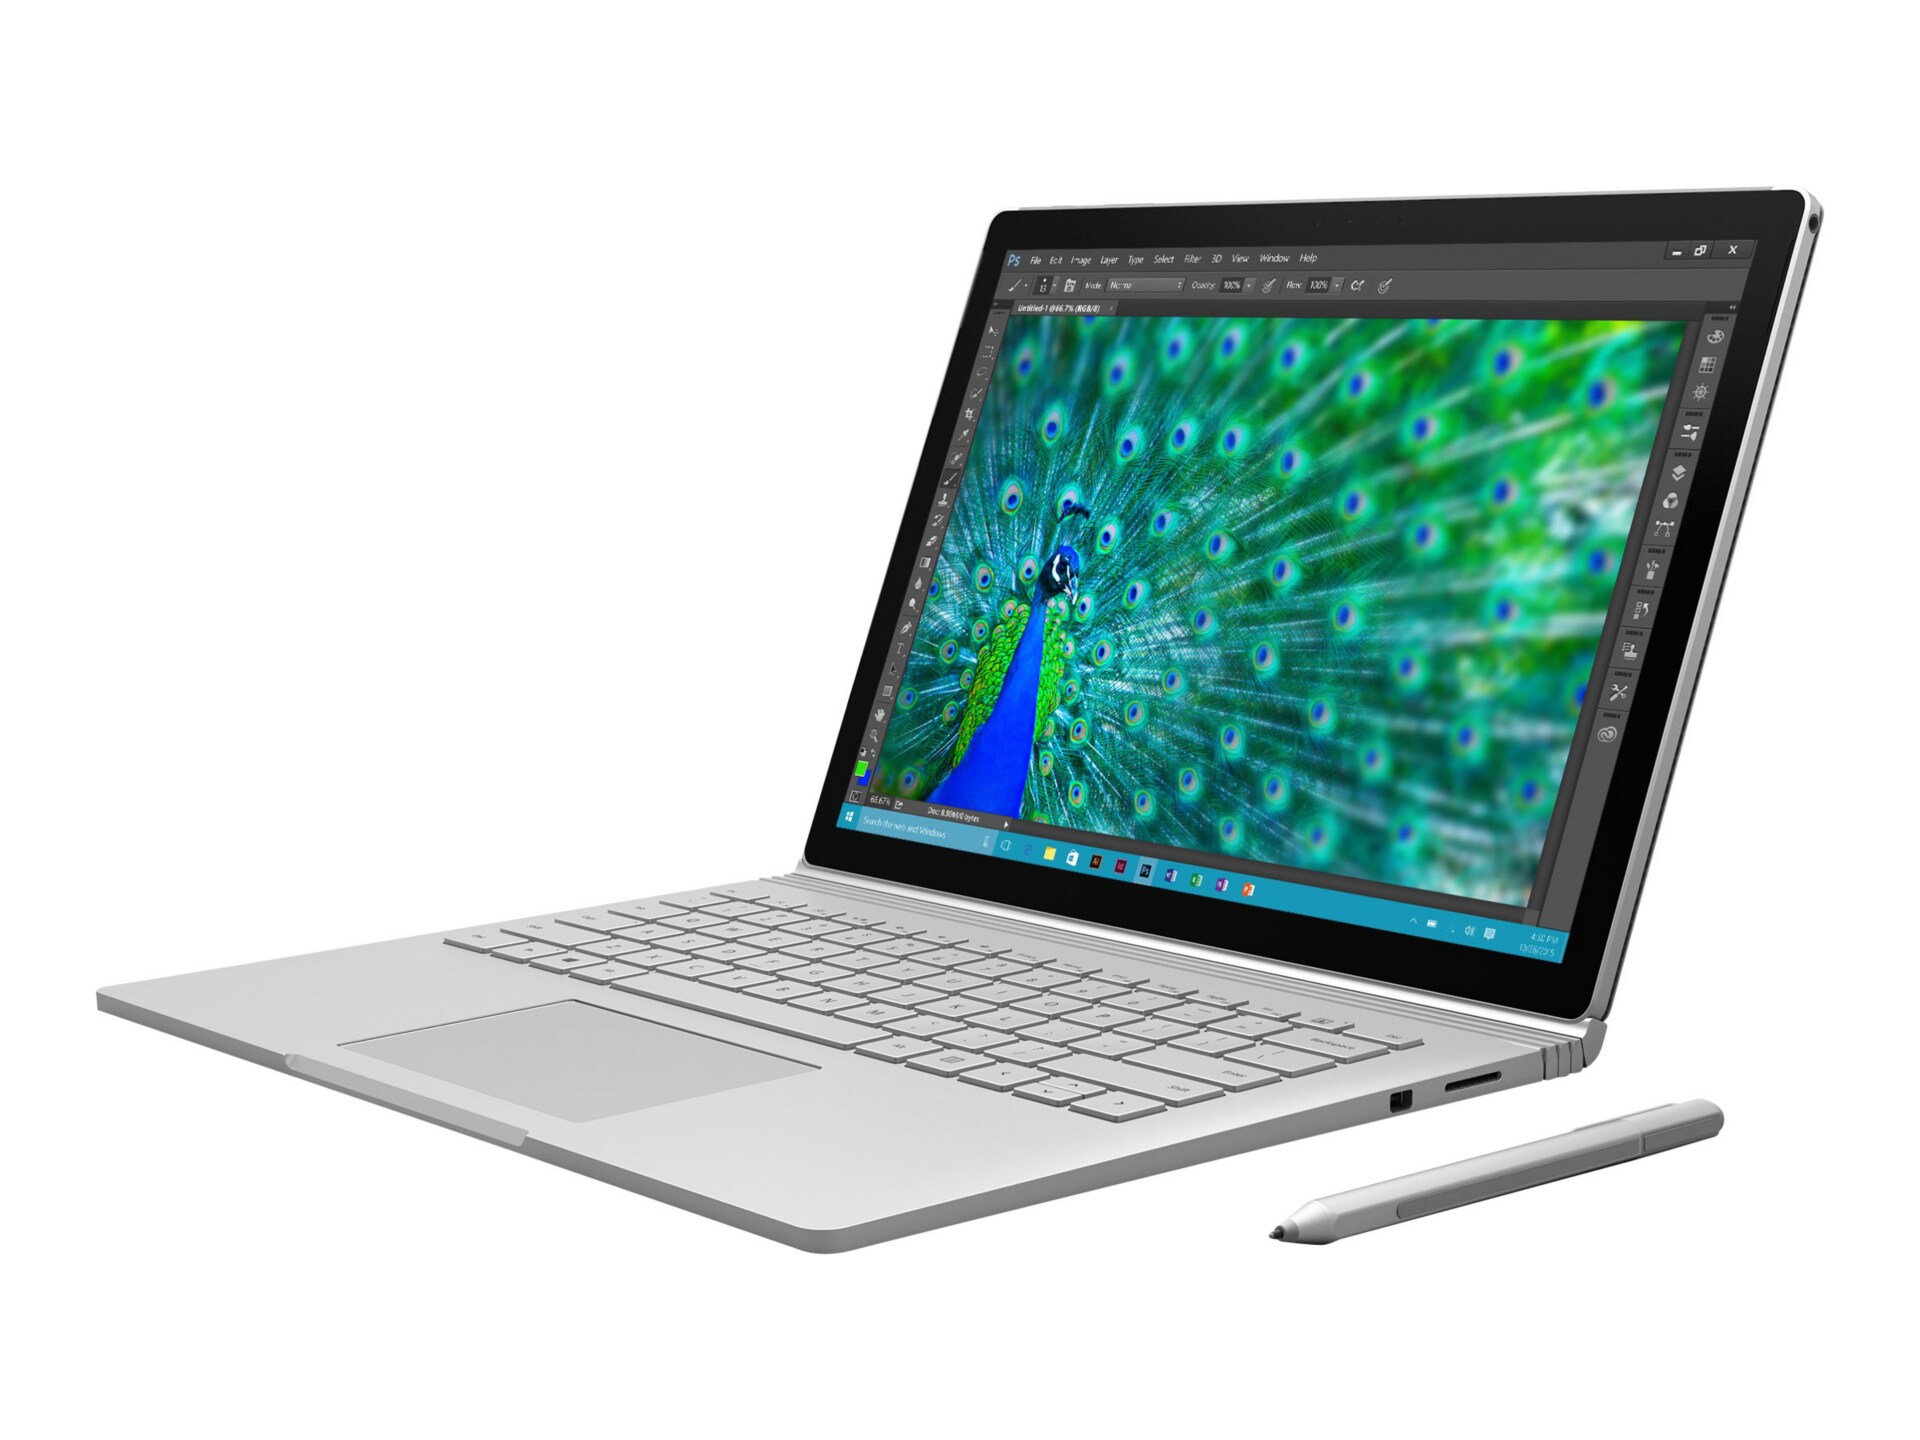 Microsoft Surface Book - 13.5" - Core i7 6600U - 16 GB RAM - 512 GB SSD - US